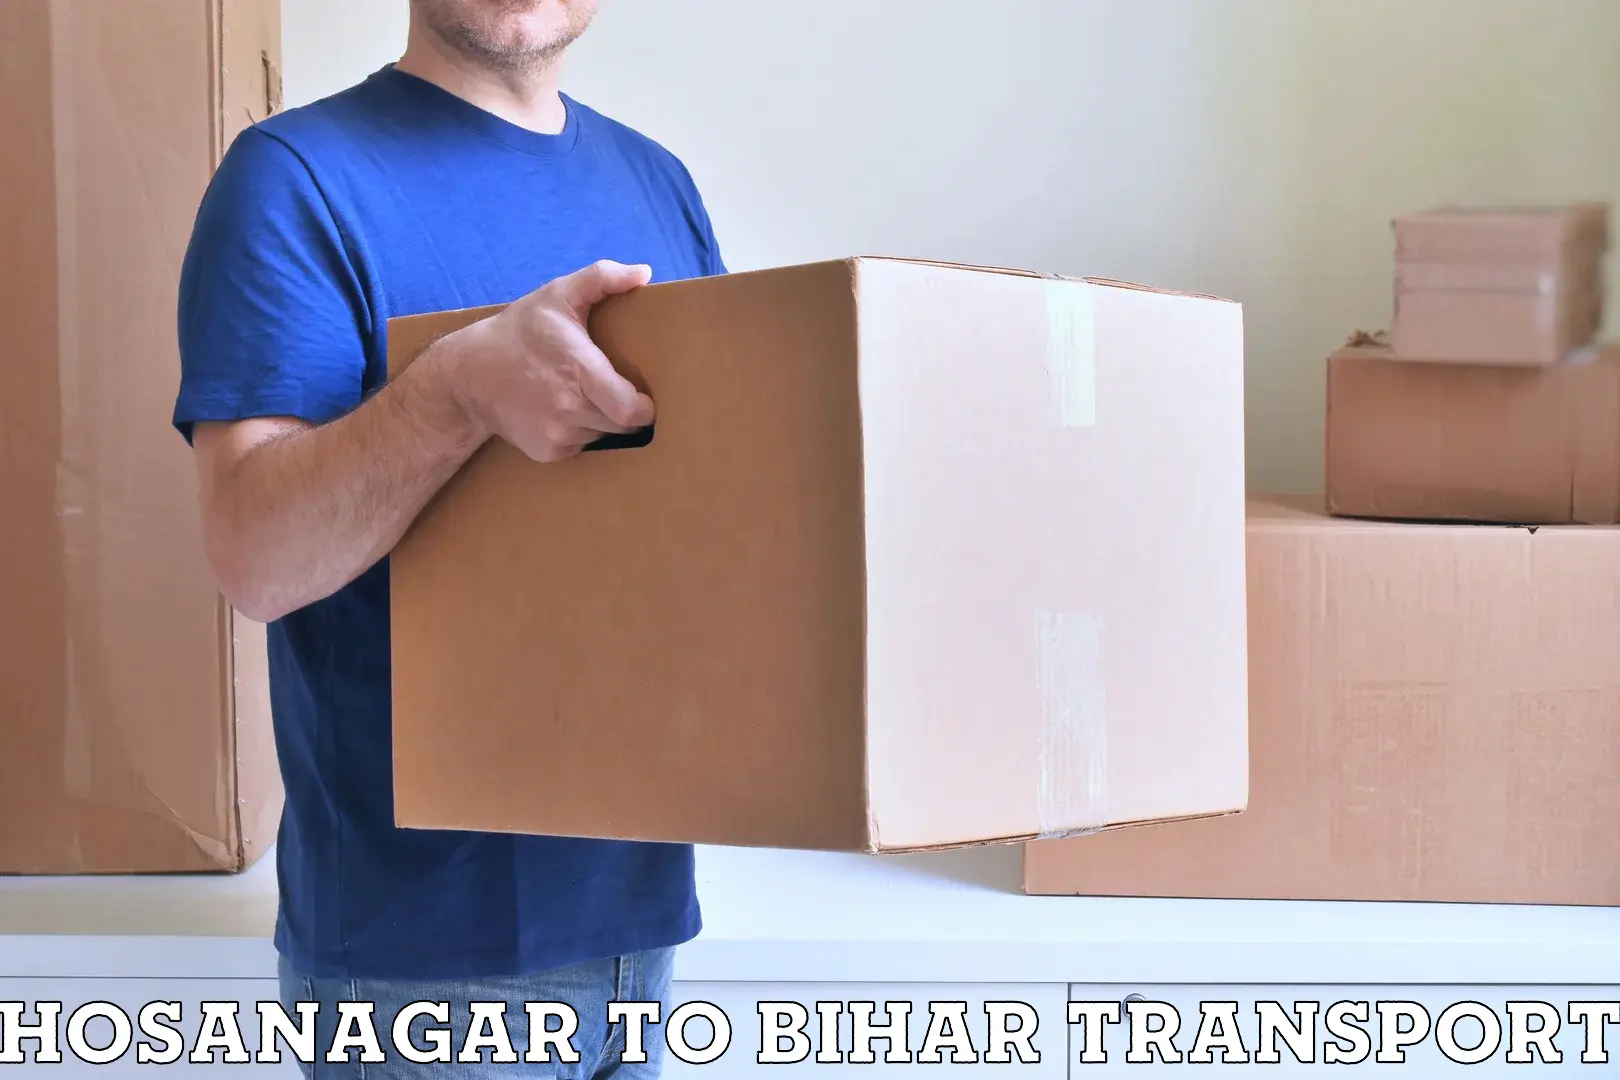 Furniture transport service Hosanagar to Fatwah